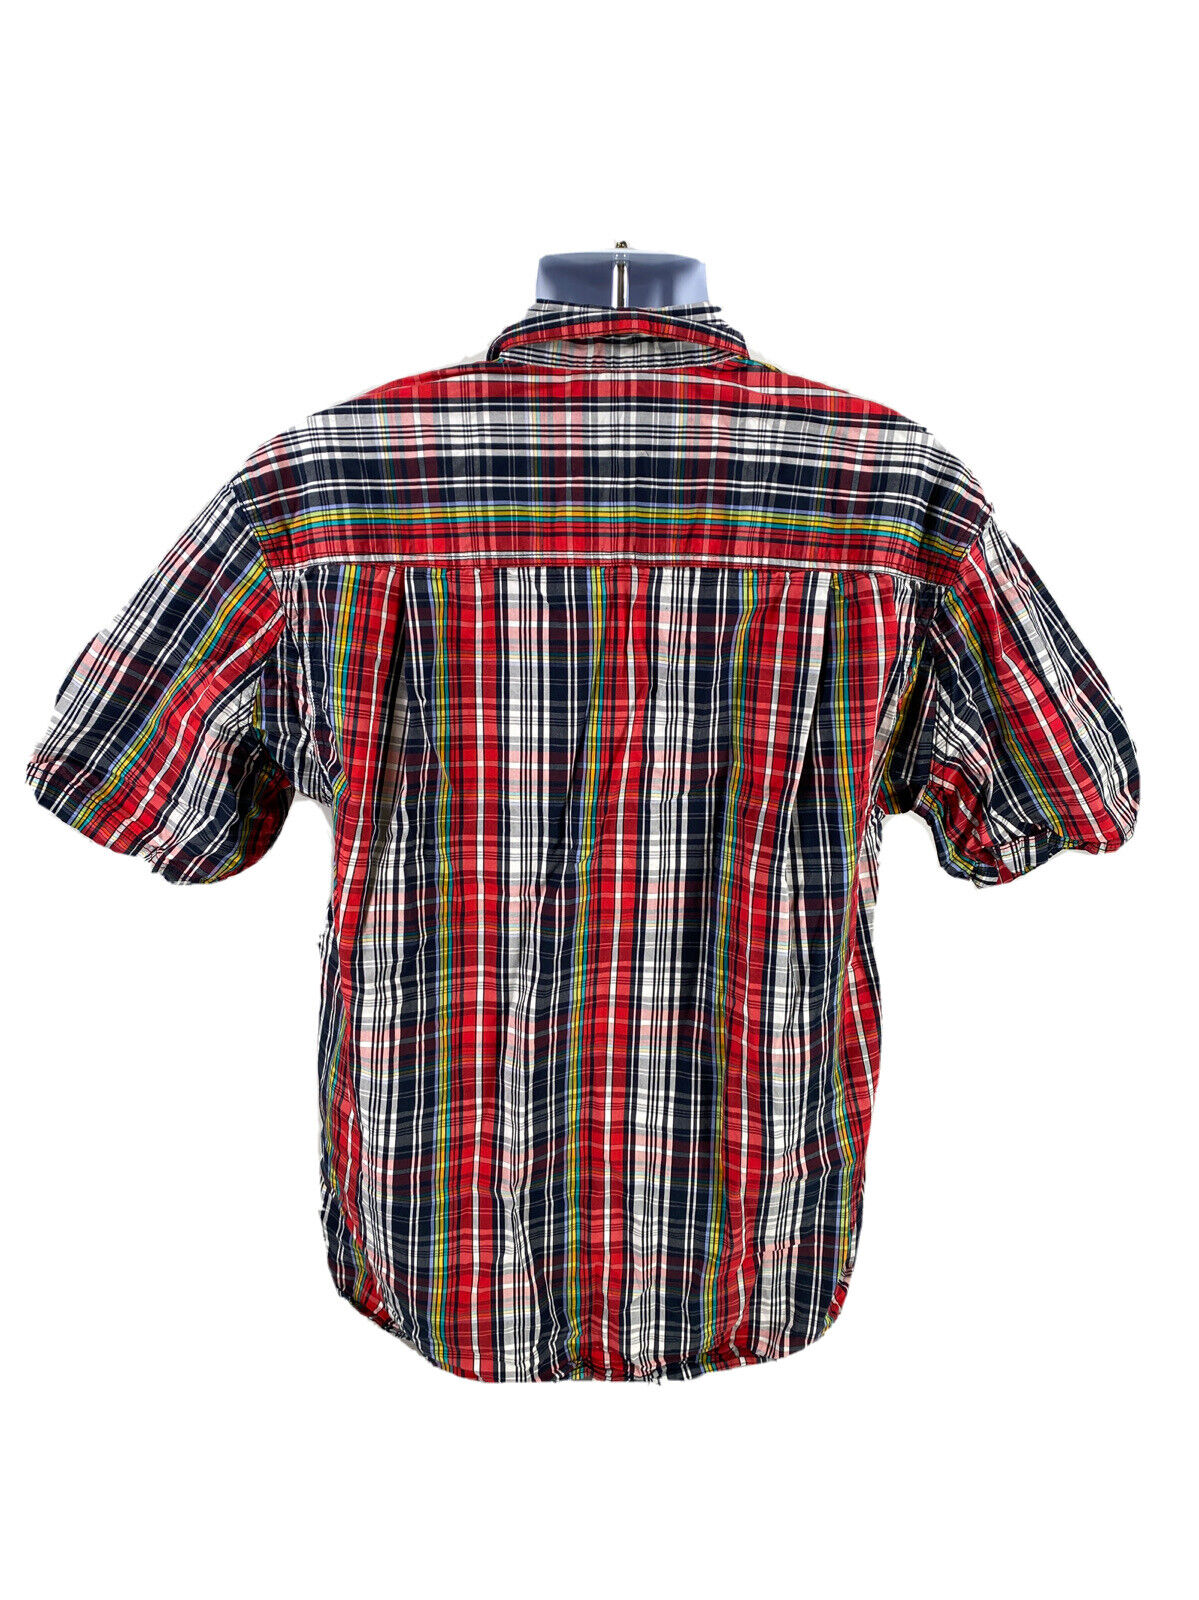 Duluth Trading Camisa con botones de manga corta azul/rojo para hombre - M Tall